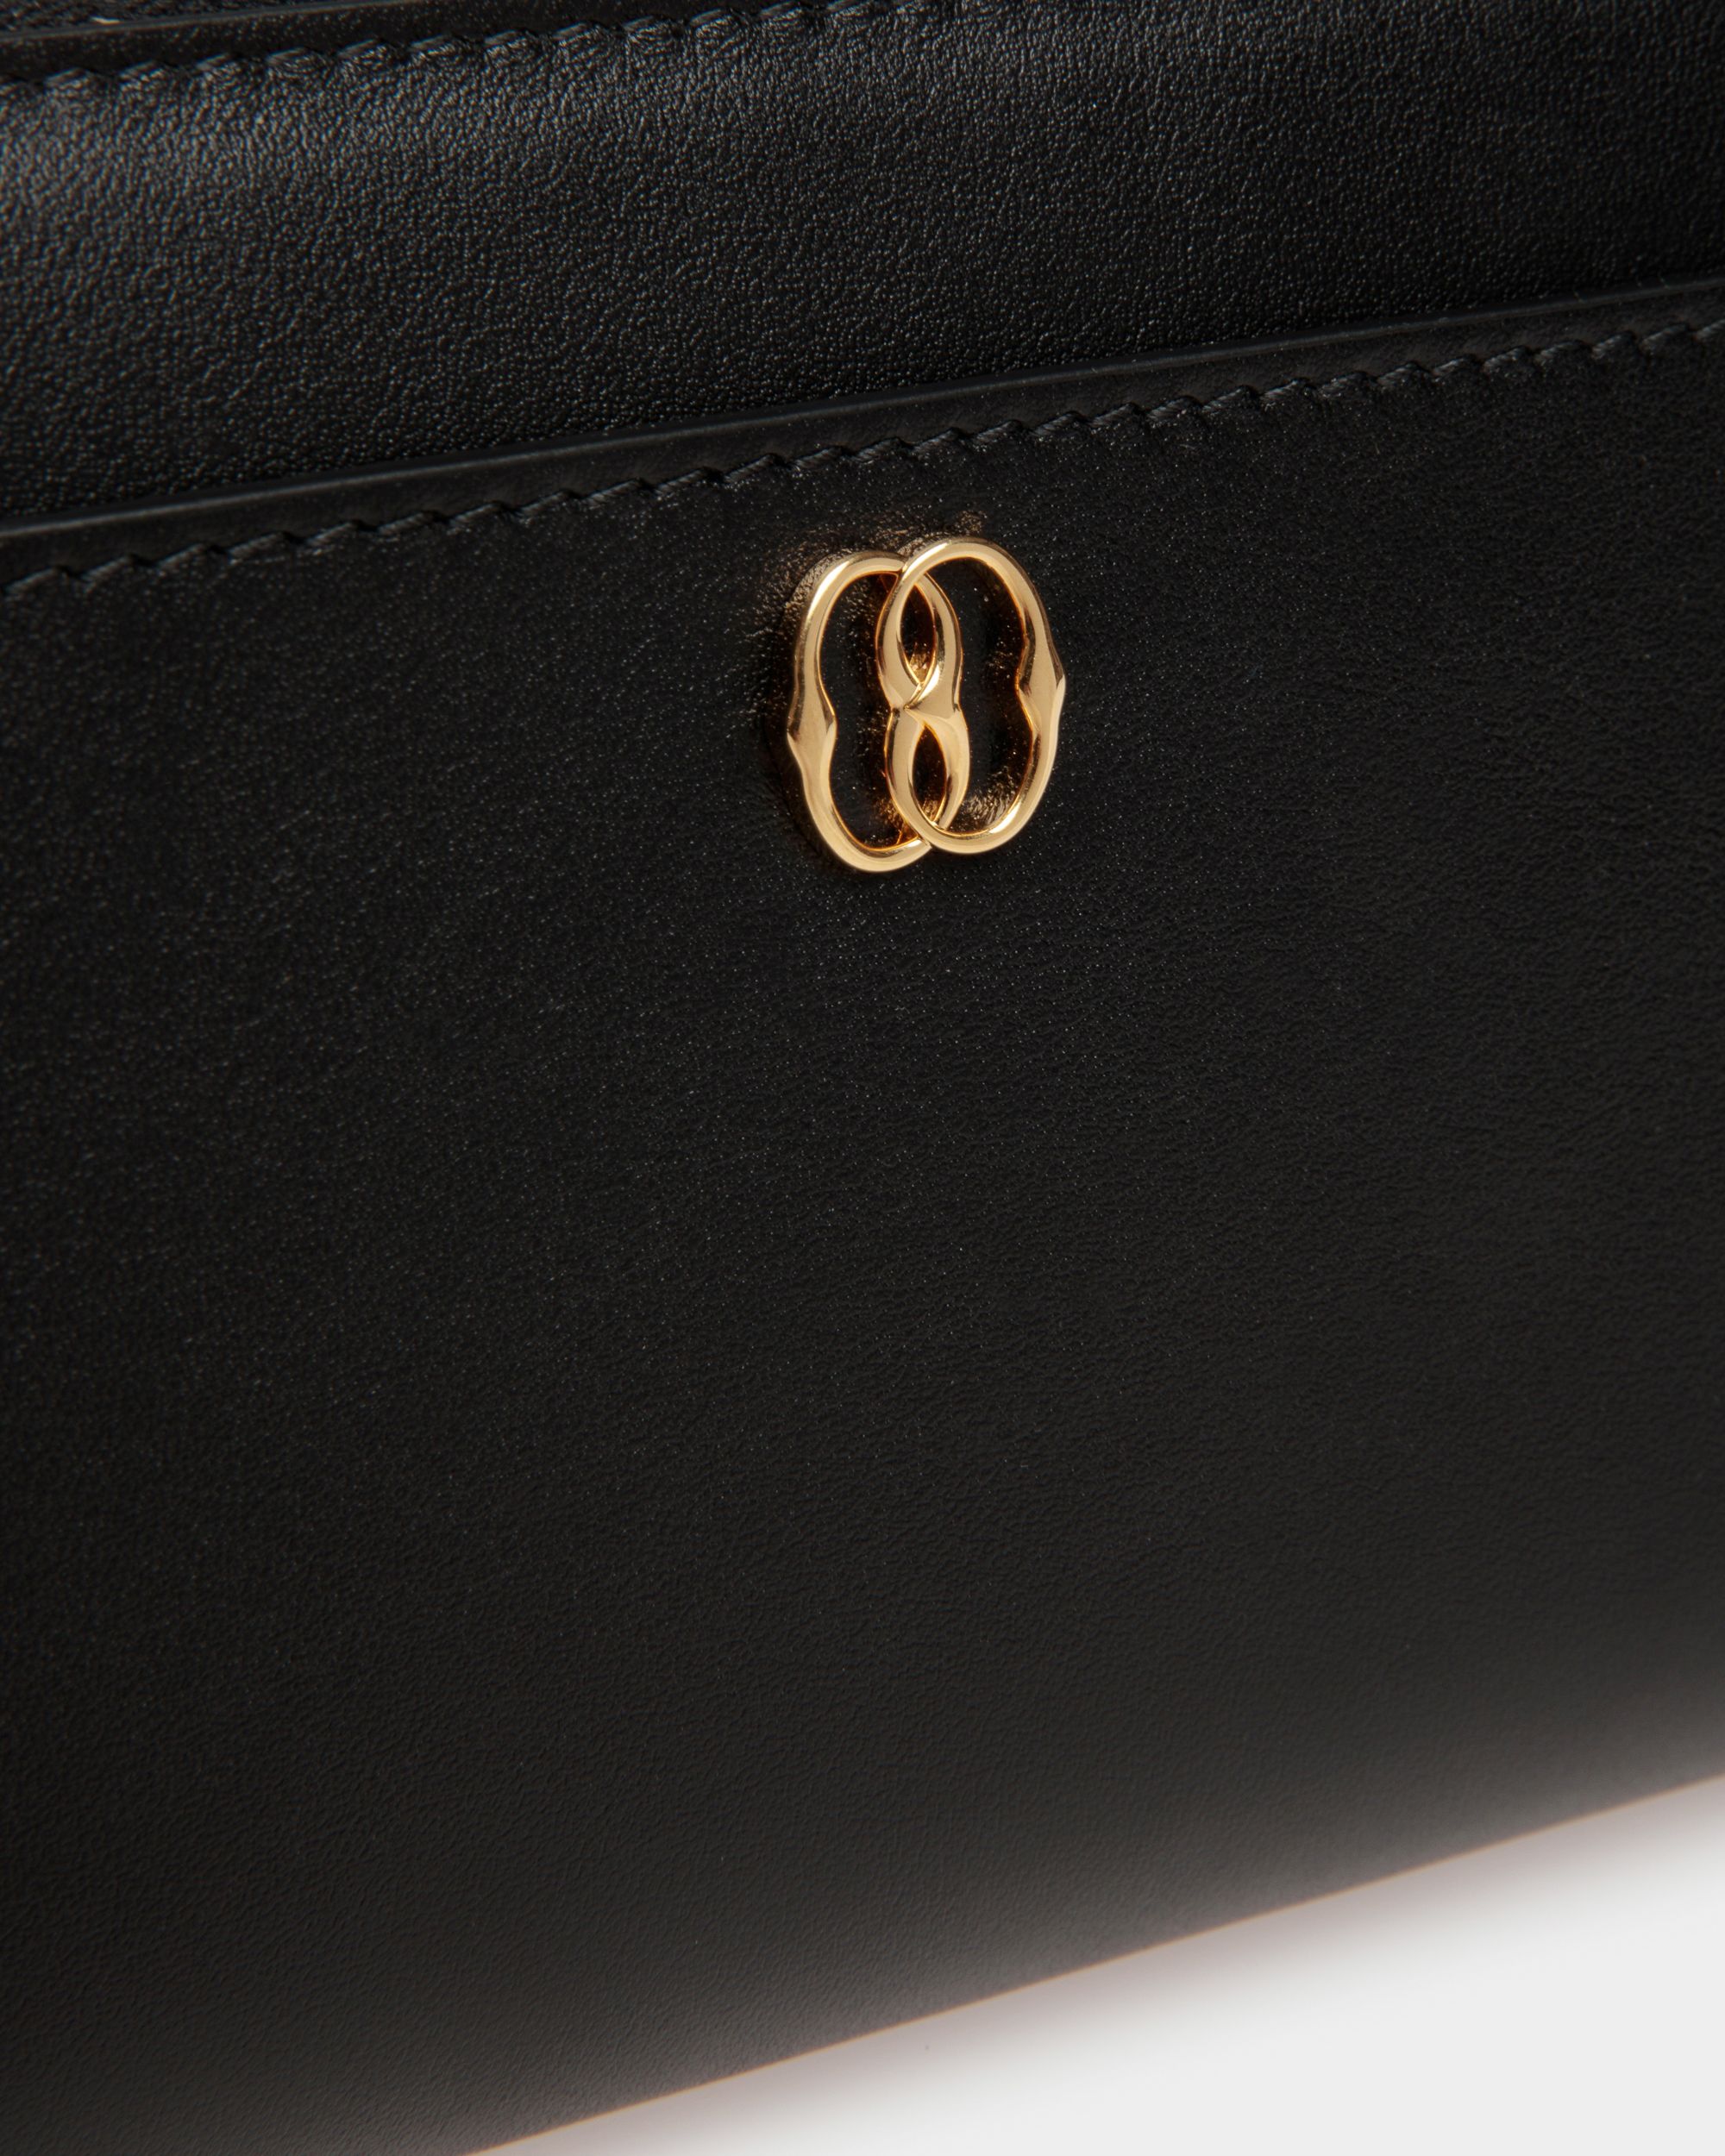 Emblem | Lange Damen-Geldbörse aus schwarzem Leder | Bally | Still Life Detail